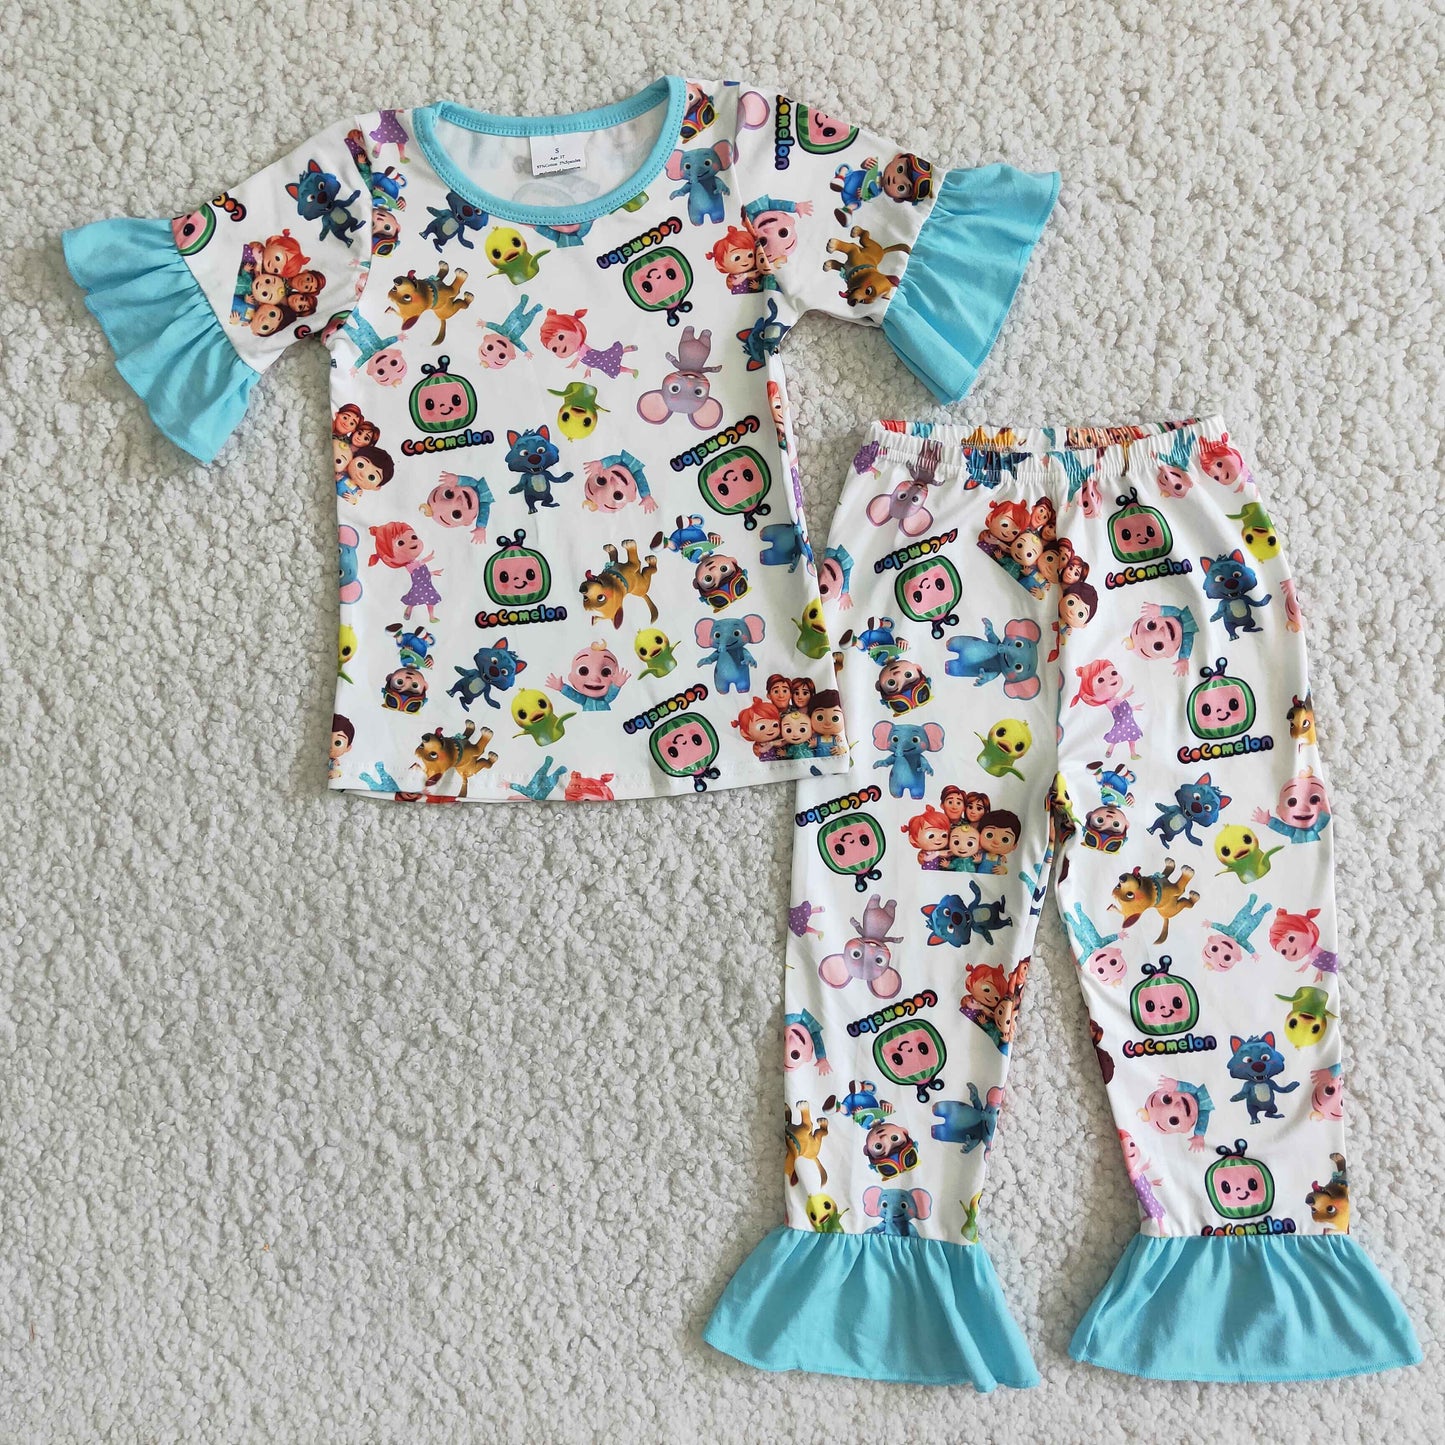 spring outfit girl clothing pajamas